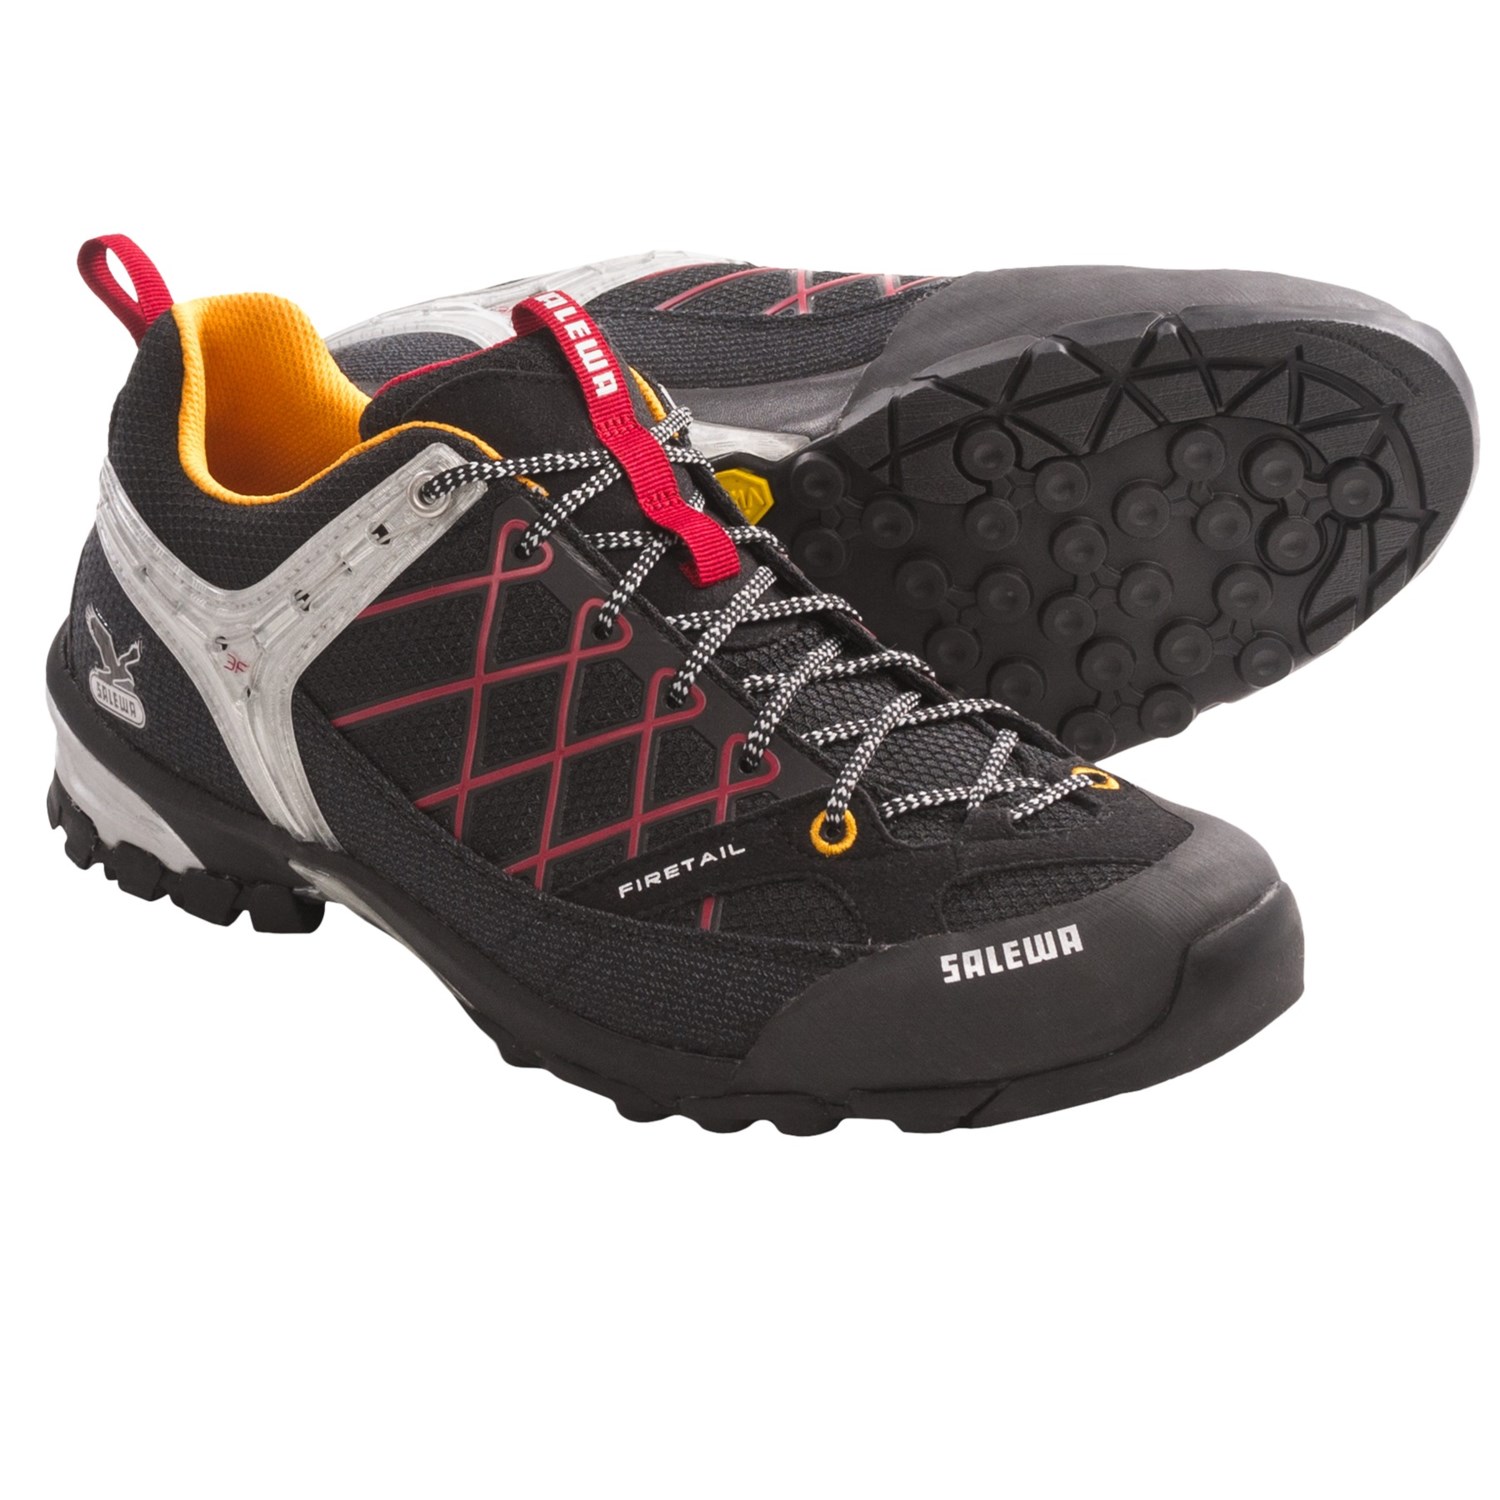 salewa-ms-firetail-trail-running-shoes-for-men-in-black-marigold~p~6918v_01~1500.2.jpg